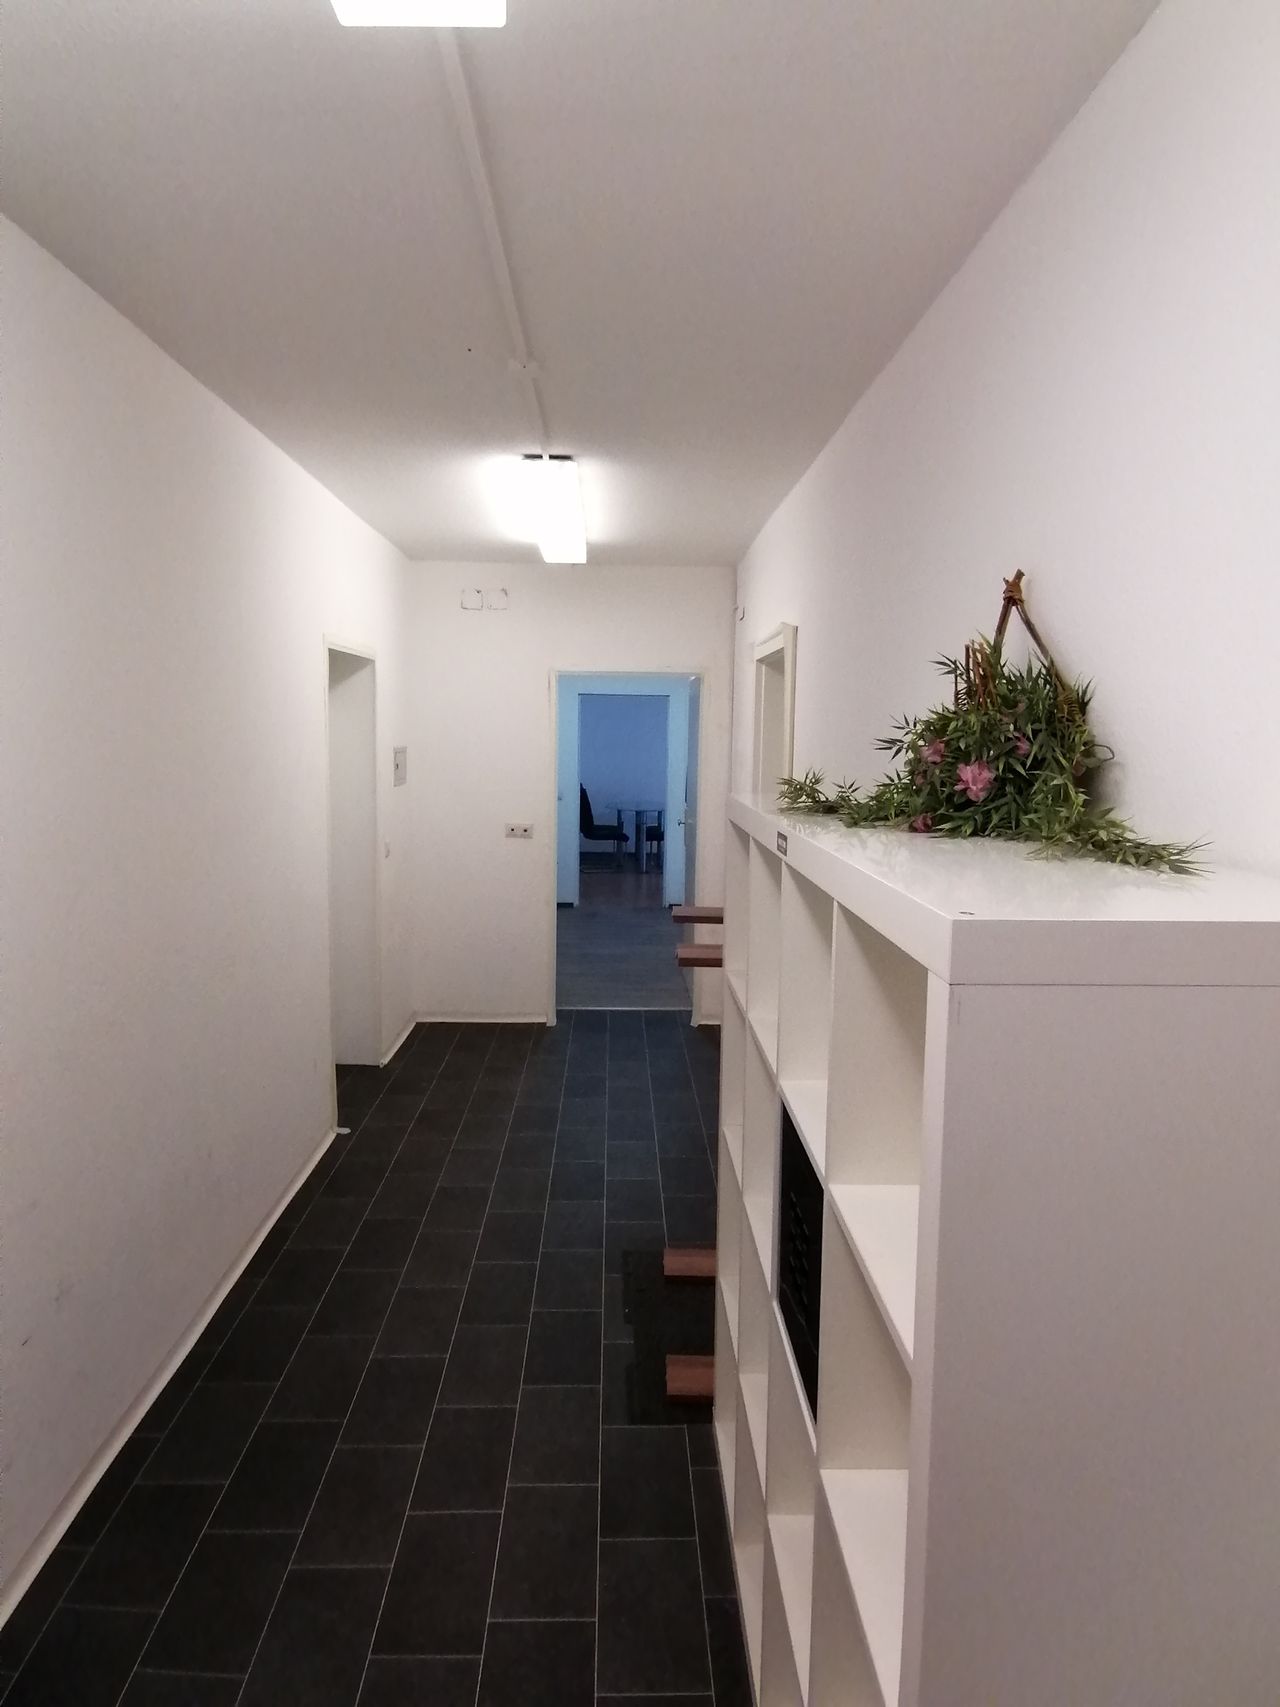 Voll möblierte 3 Zimmer Apartment in Hannover/List